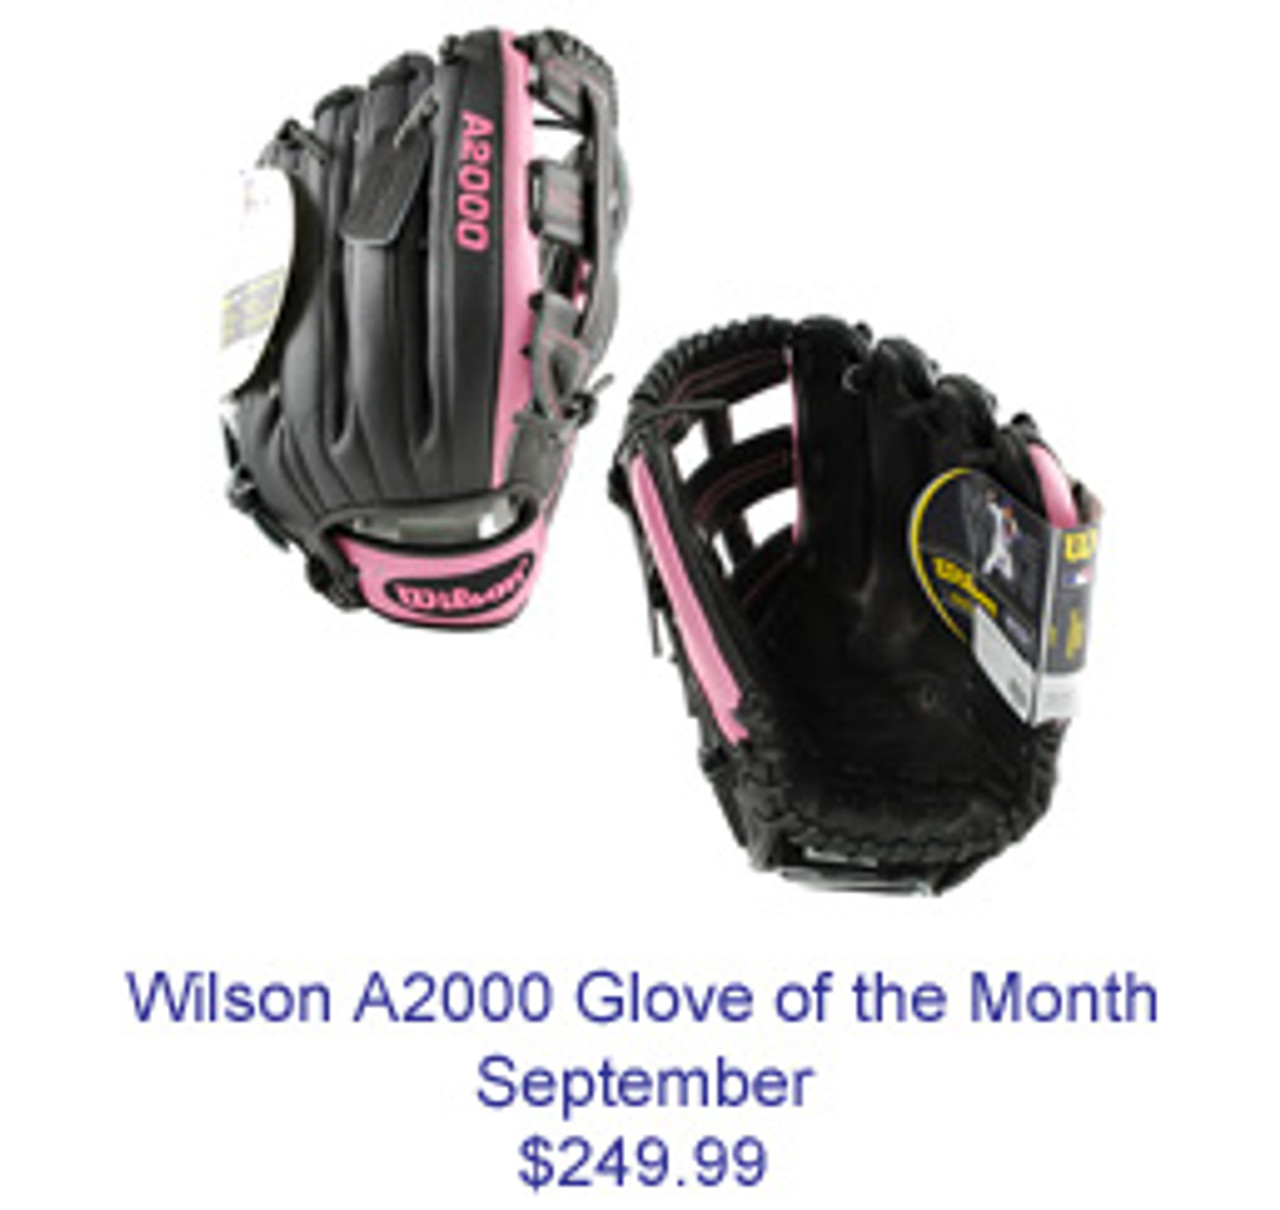 Wilson August 2013 Glove of the Month 1787 Hanley Ramirez Model